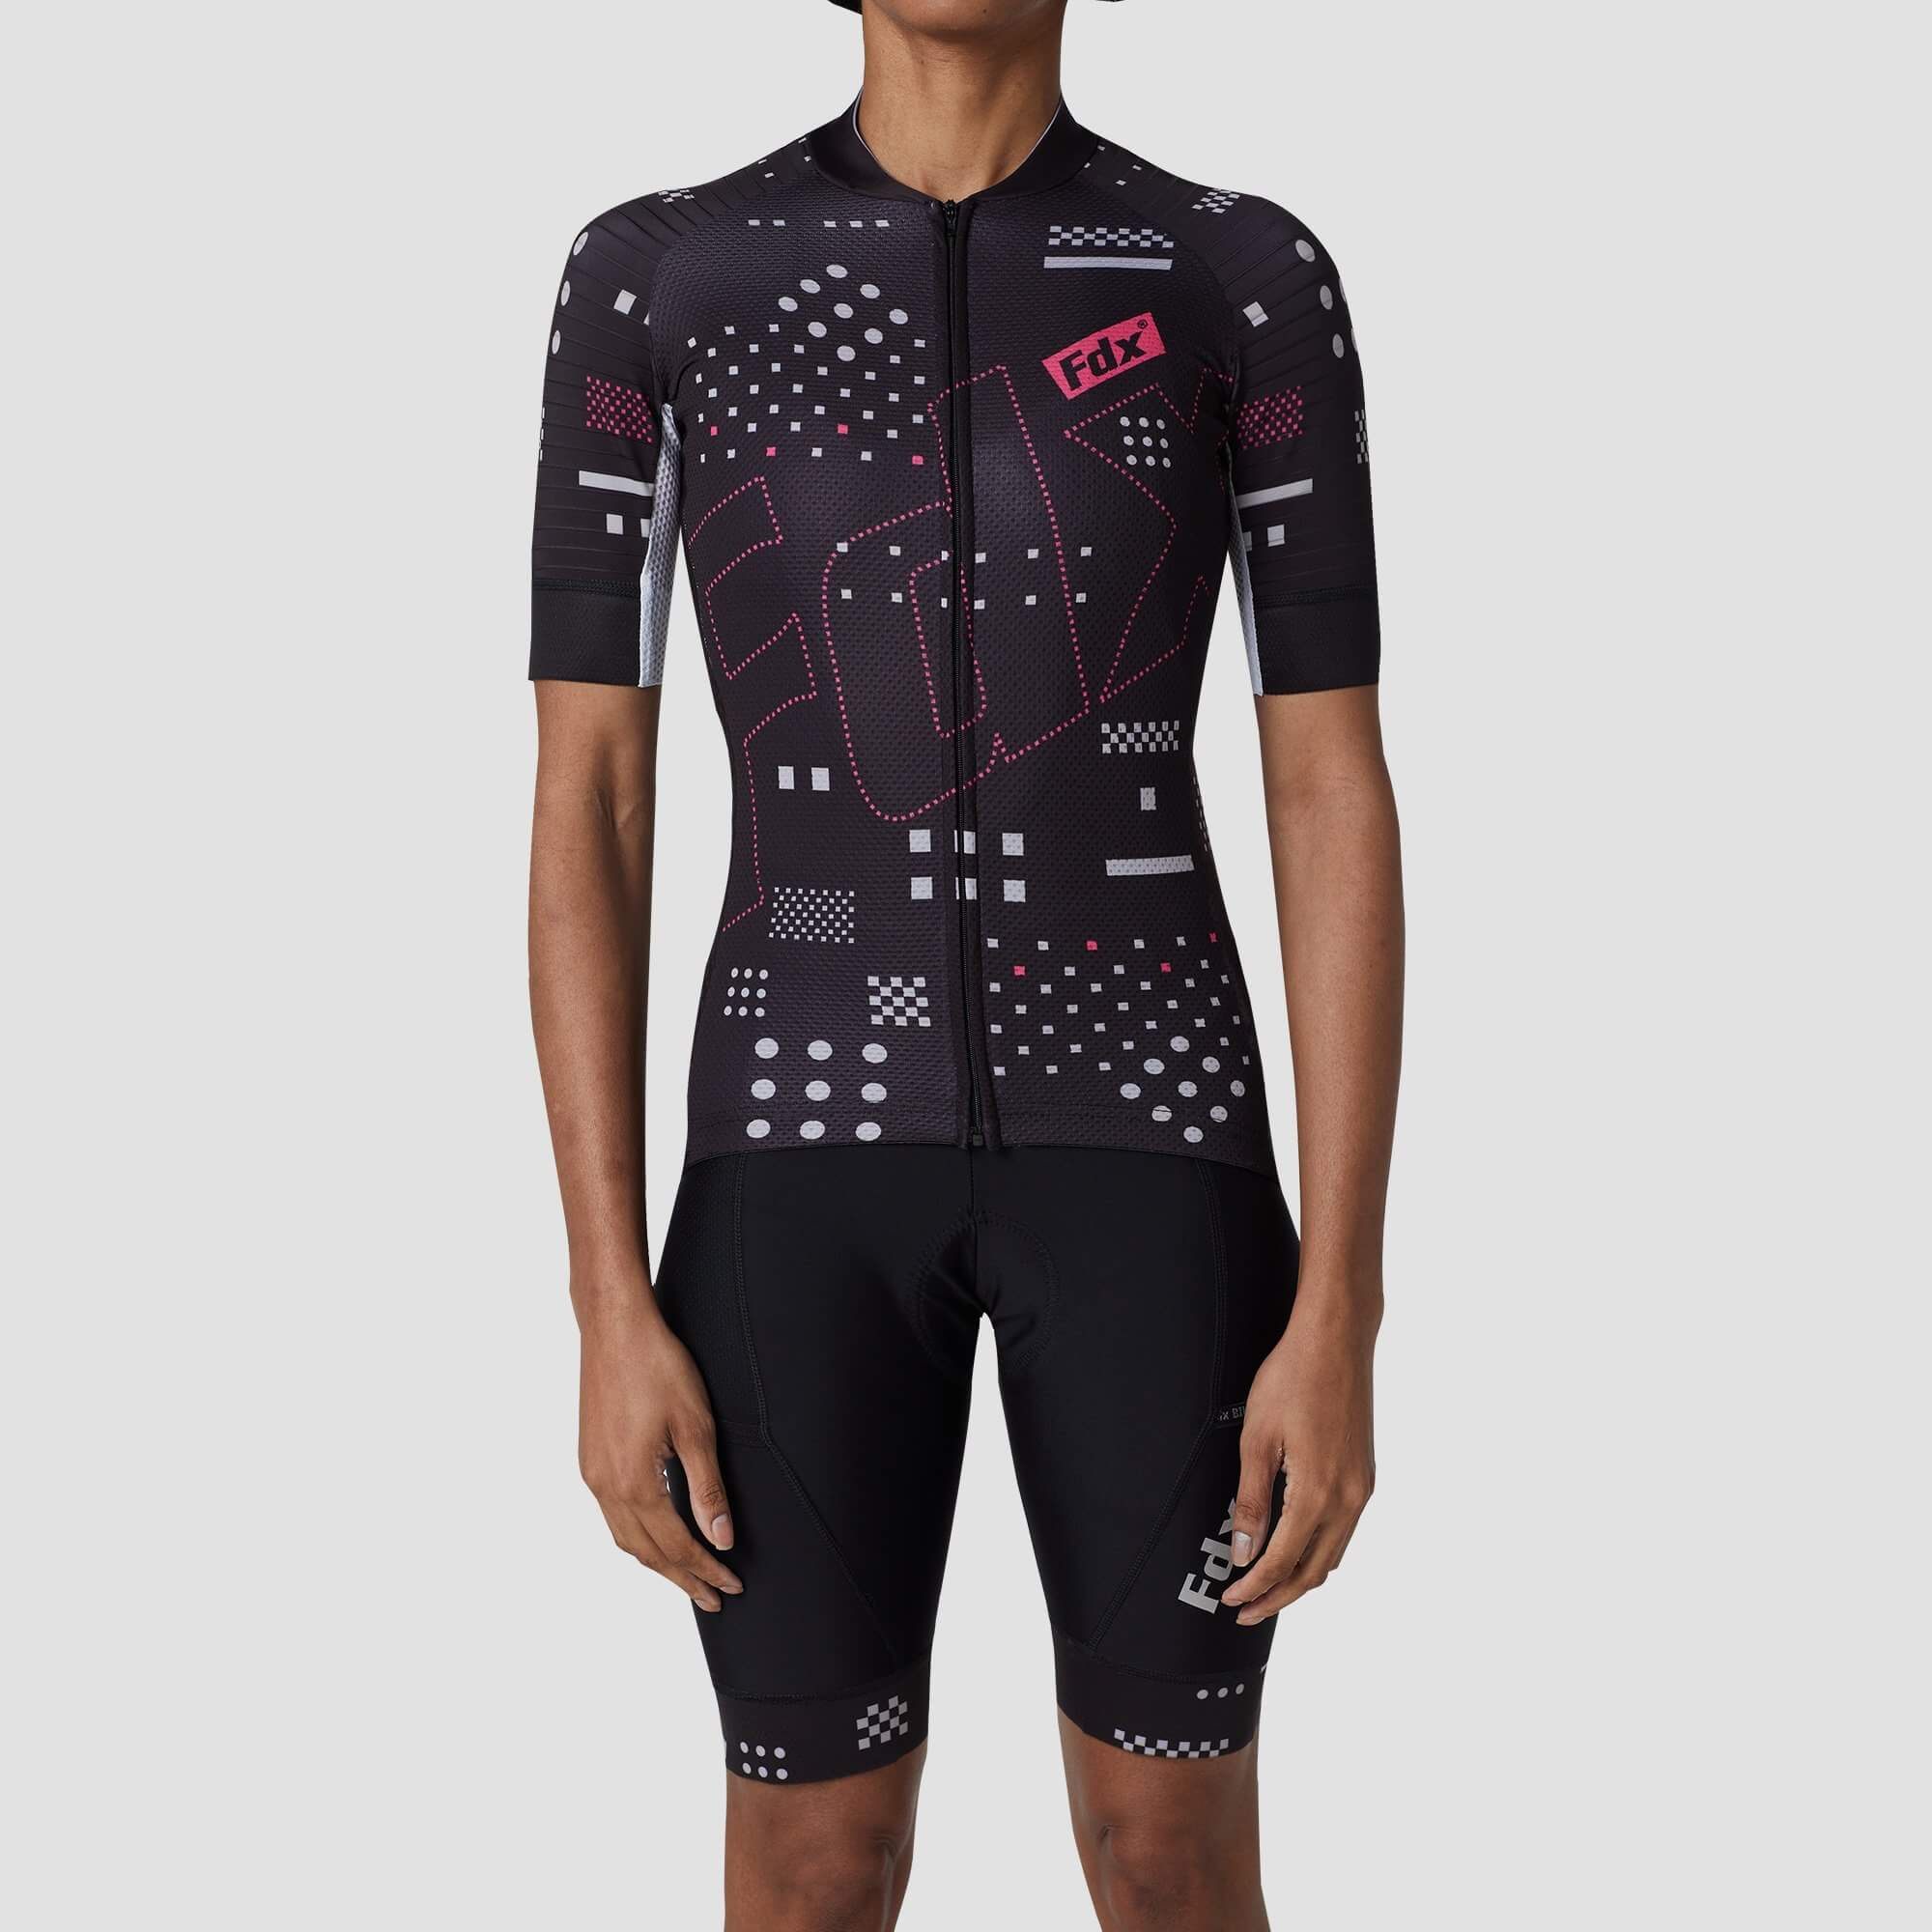 Fdx Women's Black Short Sleeve Cycling Jersey & Gel Padded Bib Shorts Best Summer Road Bike Wear Light Weight, Hi-viz Reflectors & Pockets - All Day